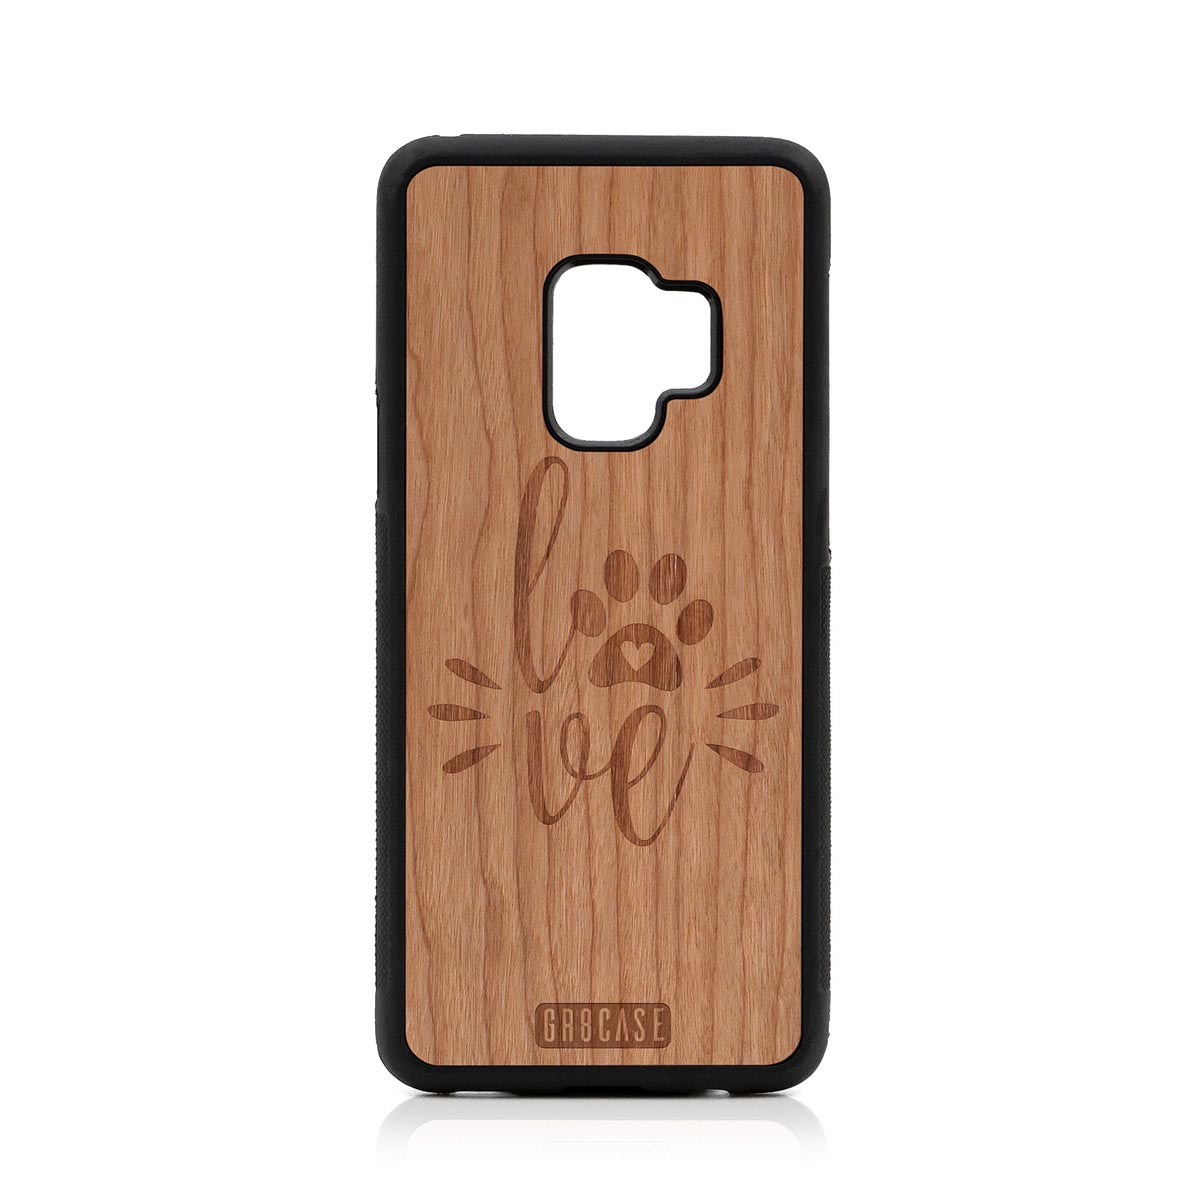 Paw Love Design Wood Case Samsung Galaxy S9 by GR8CASE